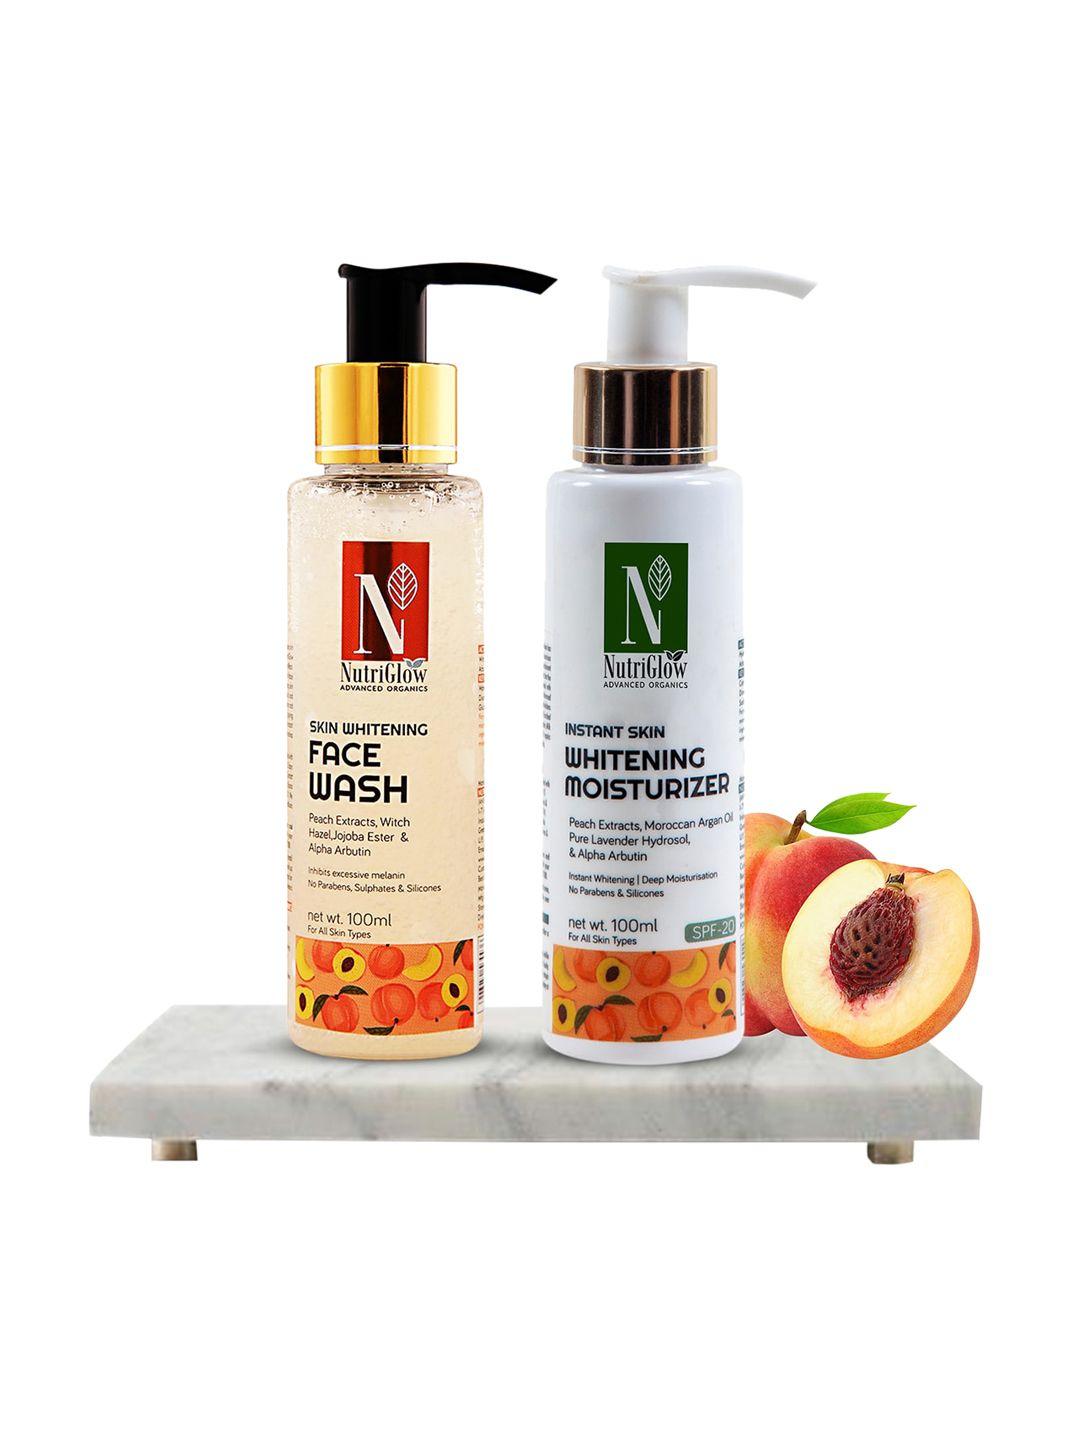 nutriglow advanced organics skin whitening face wash and moisturizer spf 20